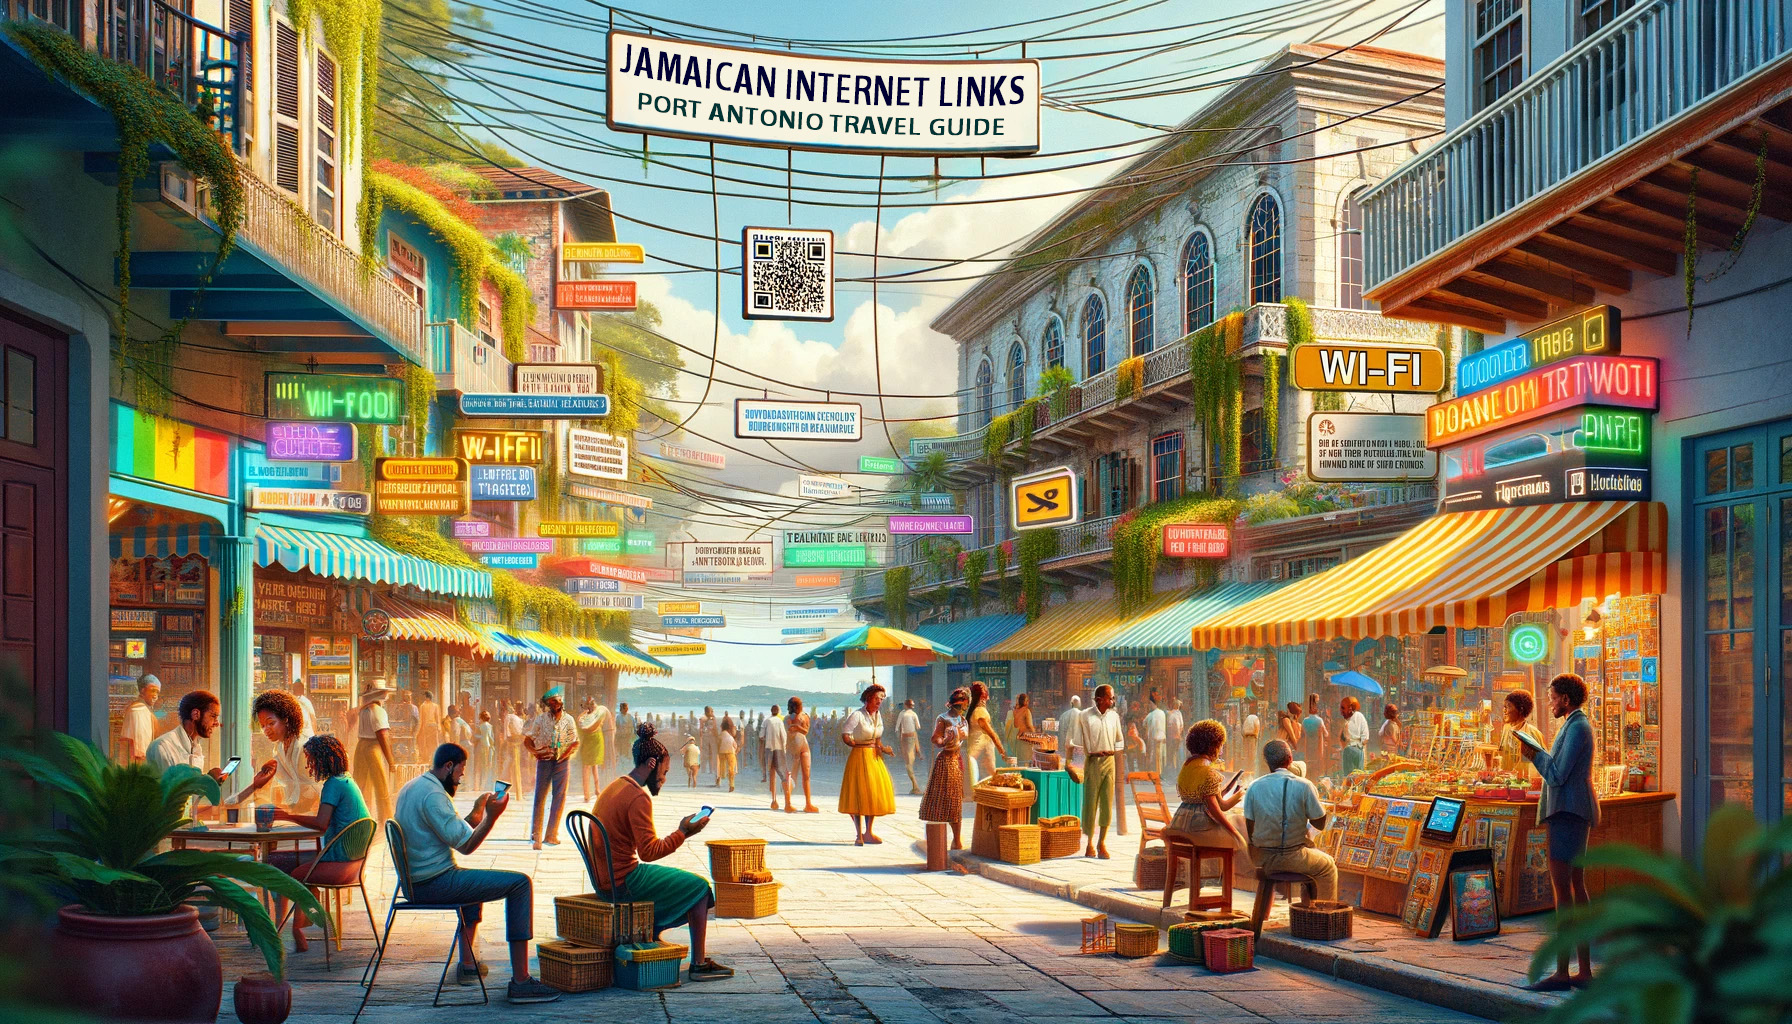 Jamaican Internet Links - Port Antonio Travel Guide